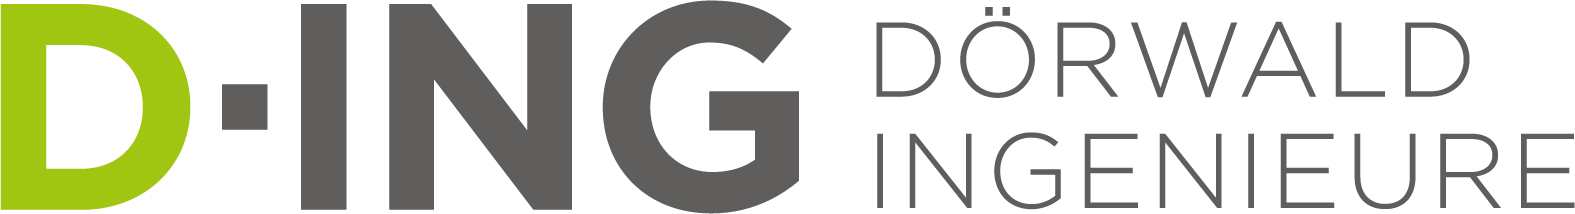 Doerwald_Ingenieure_Logo